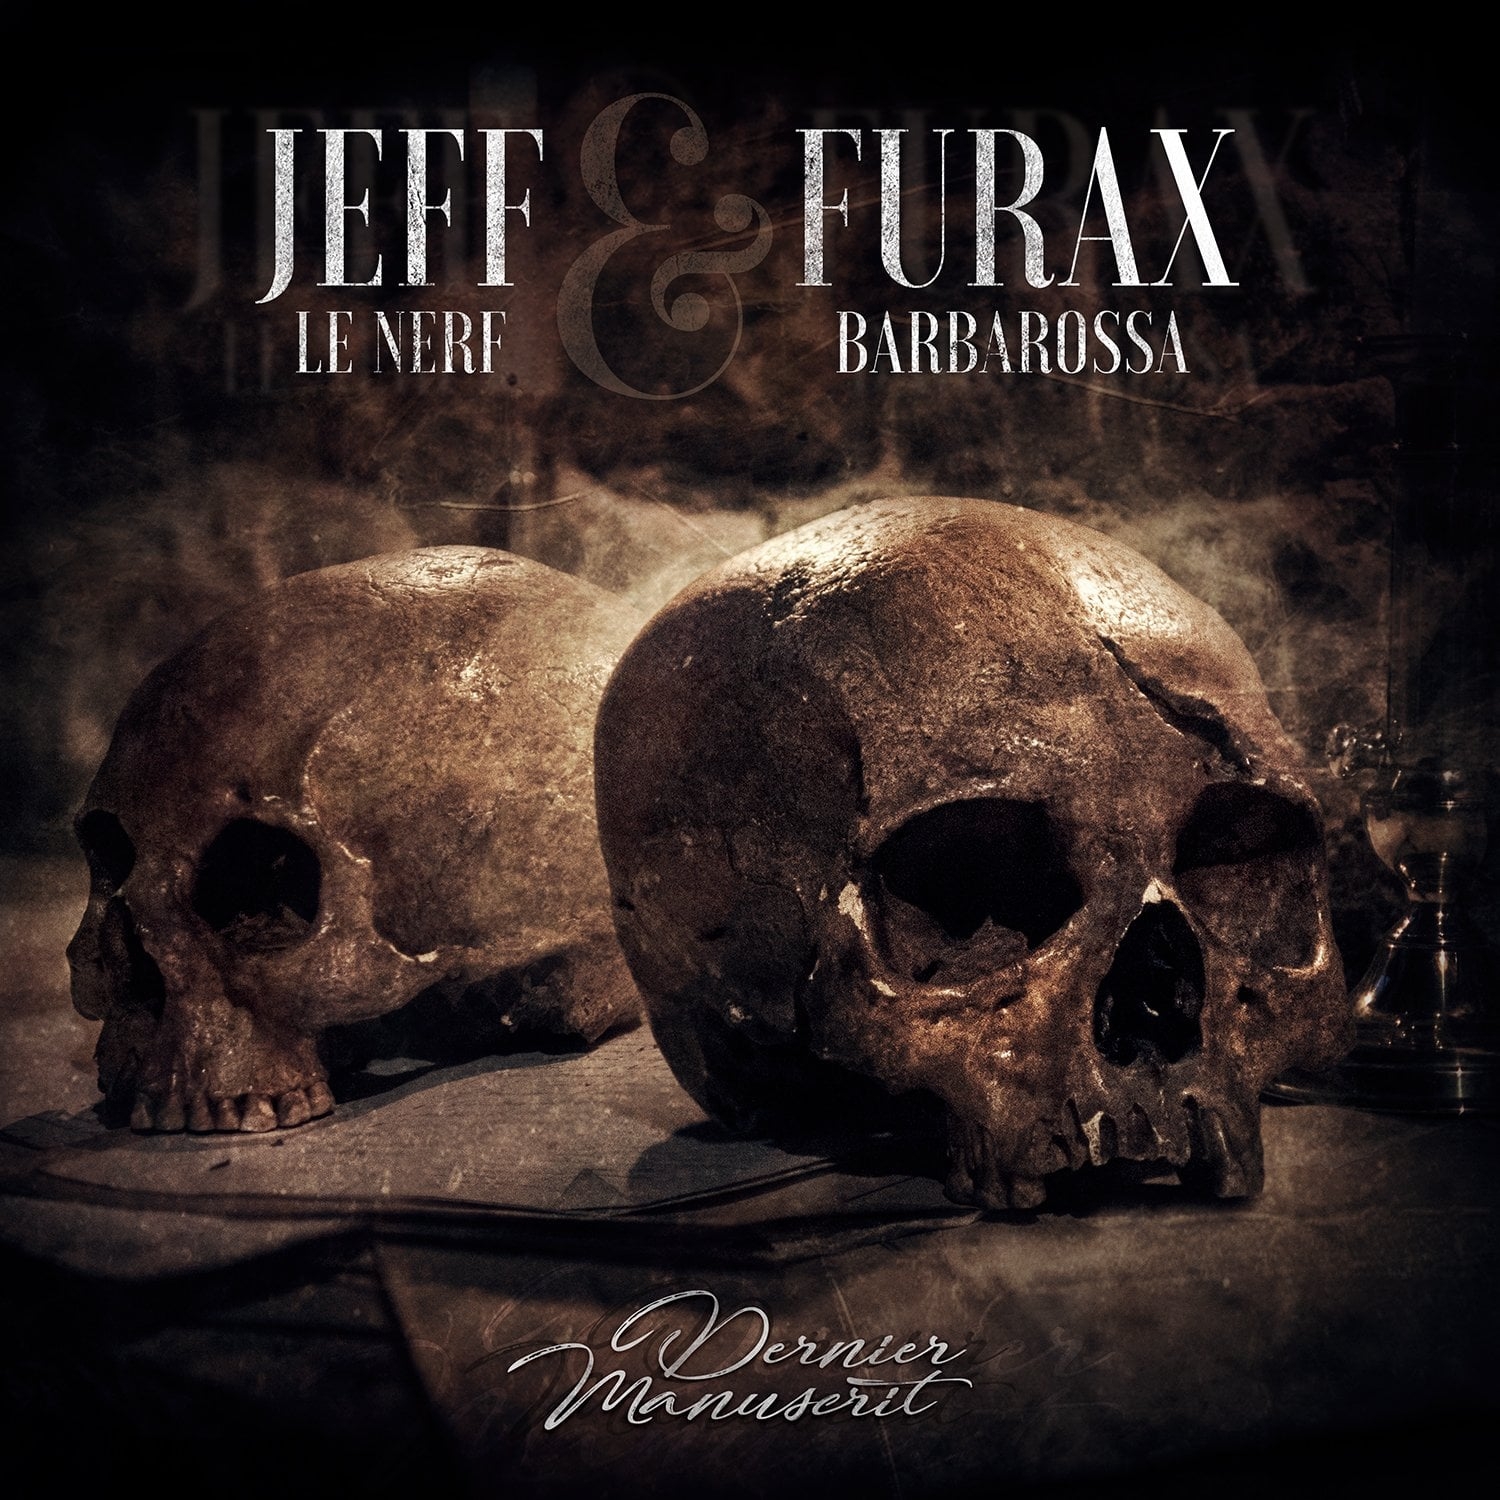 Album Cd "Furax & jeff le nerf " - dernier manuscrit de furax sur Scredboutique.com